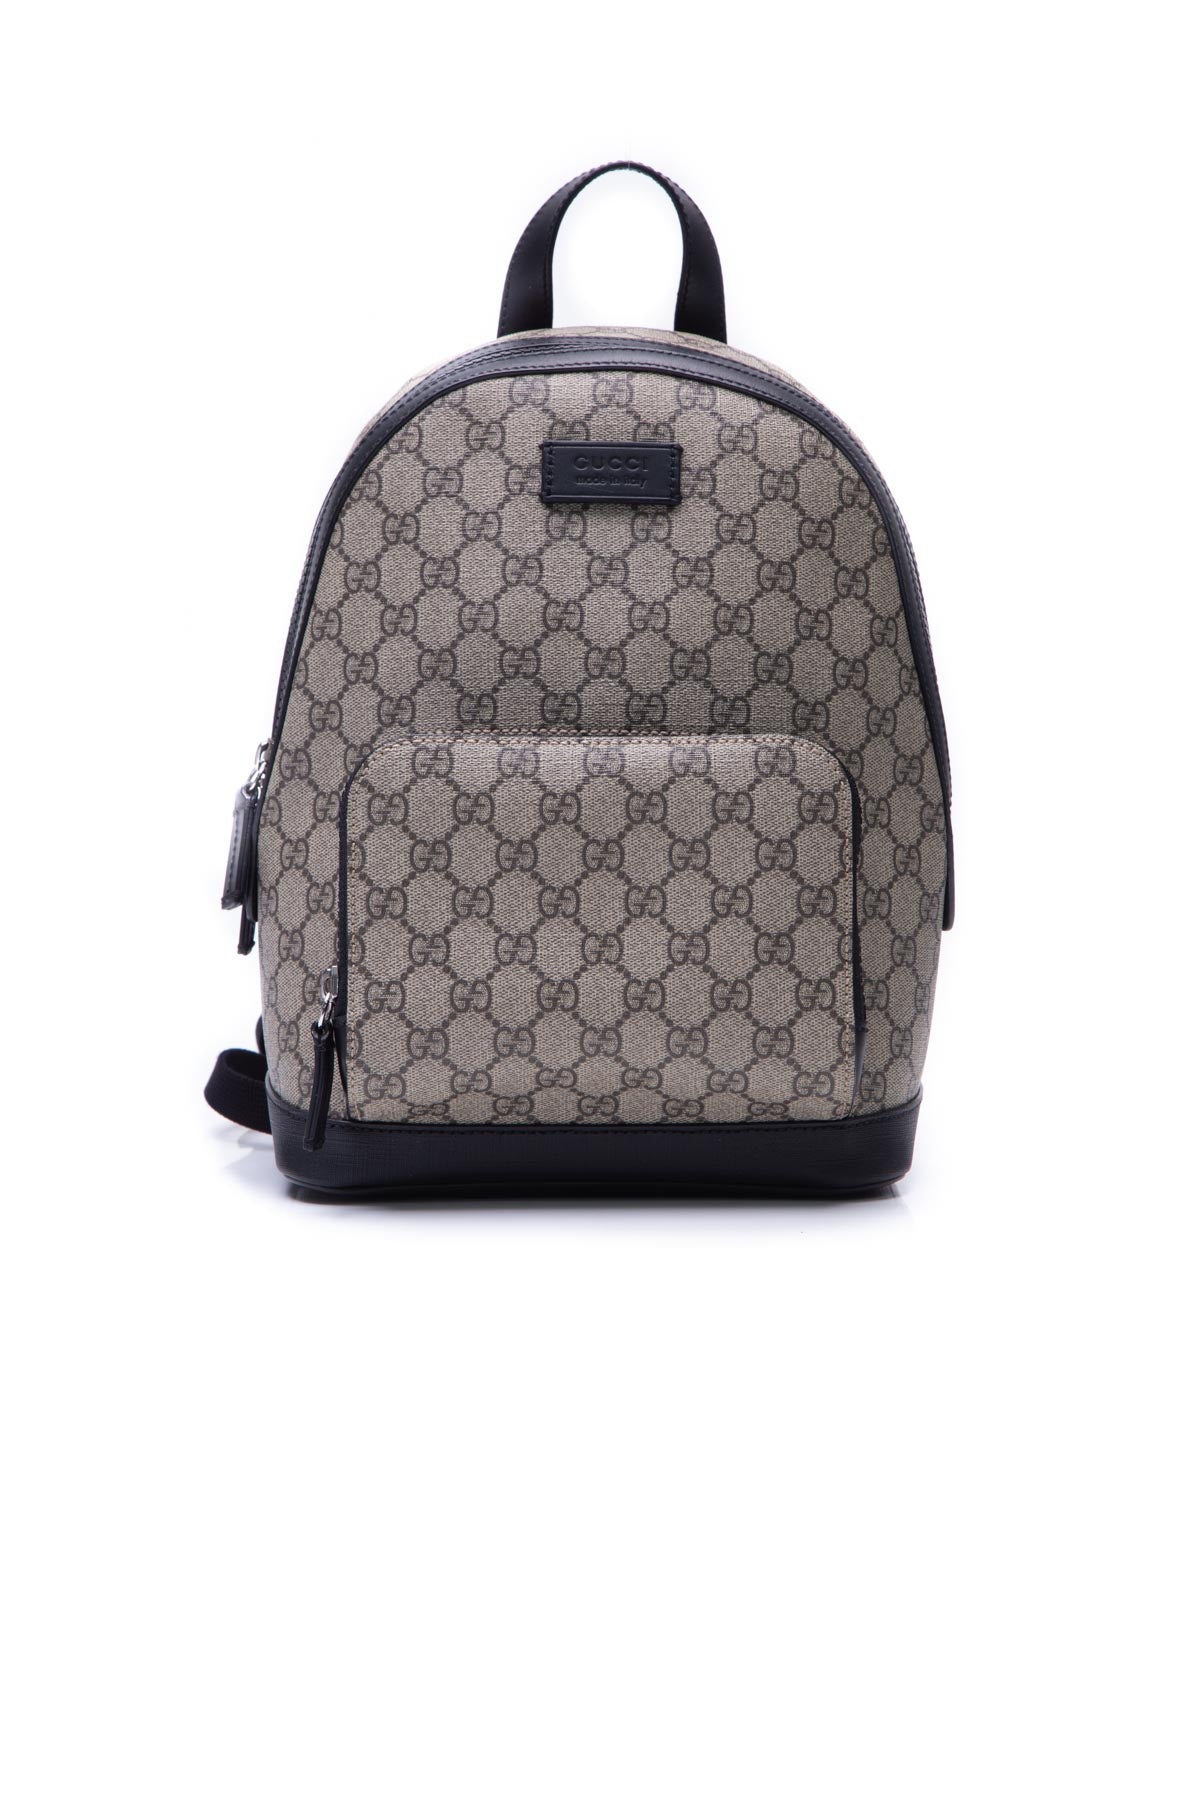 Shop the GG Supreme Gucci Eden Belt Bag at GUCCI.COM. Enjoy Free